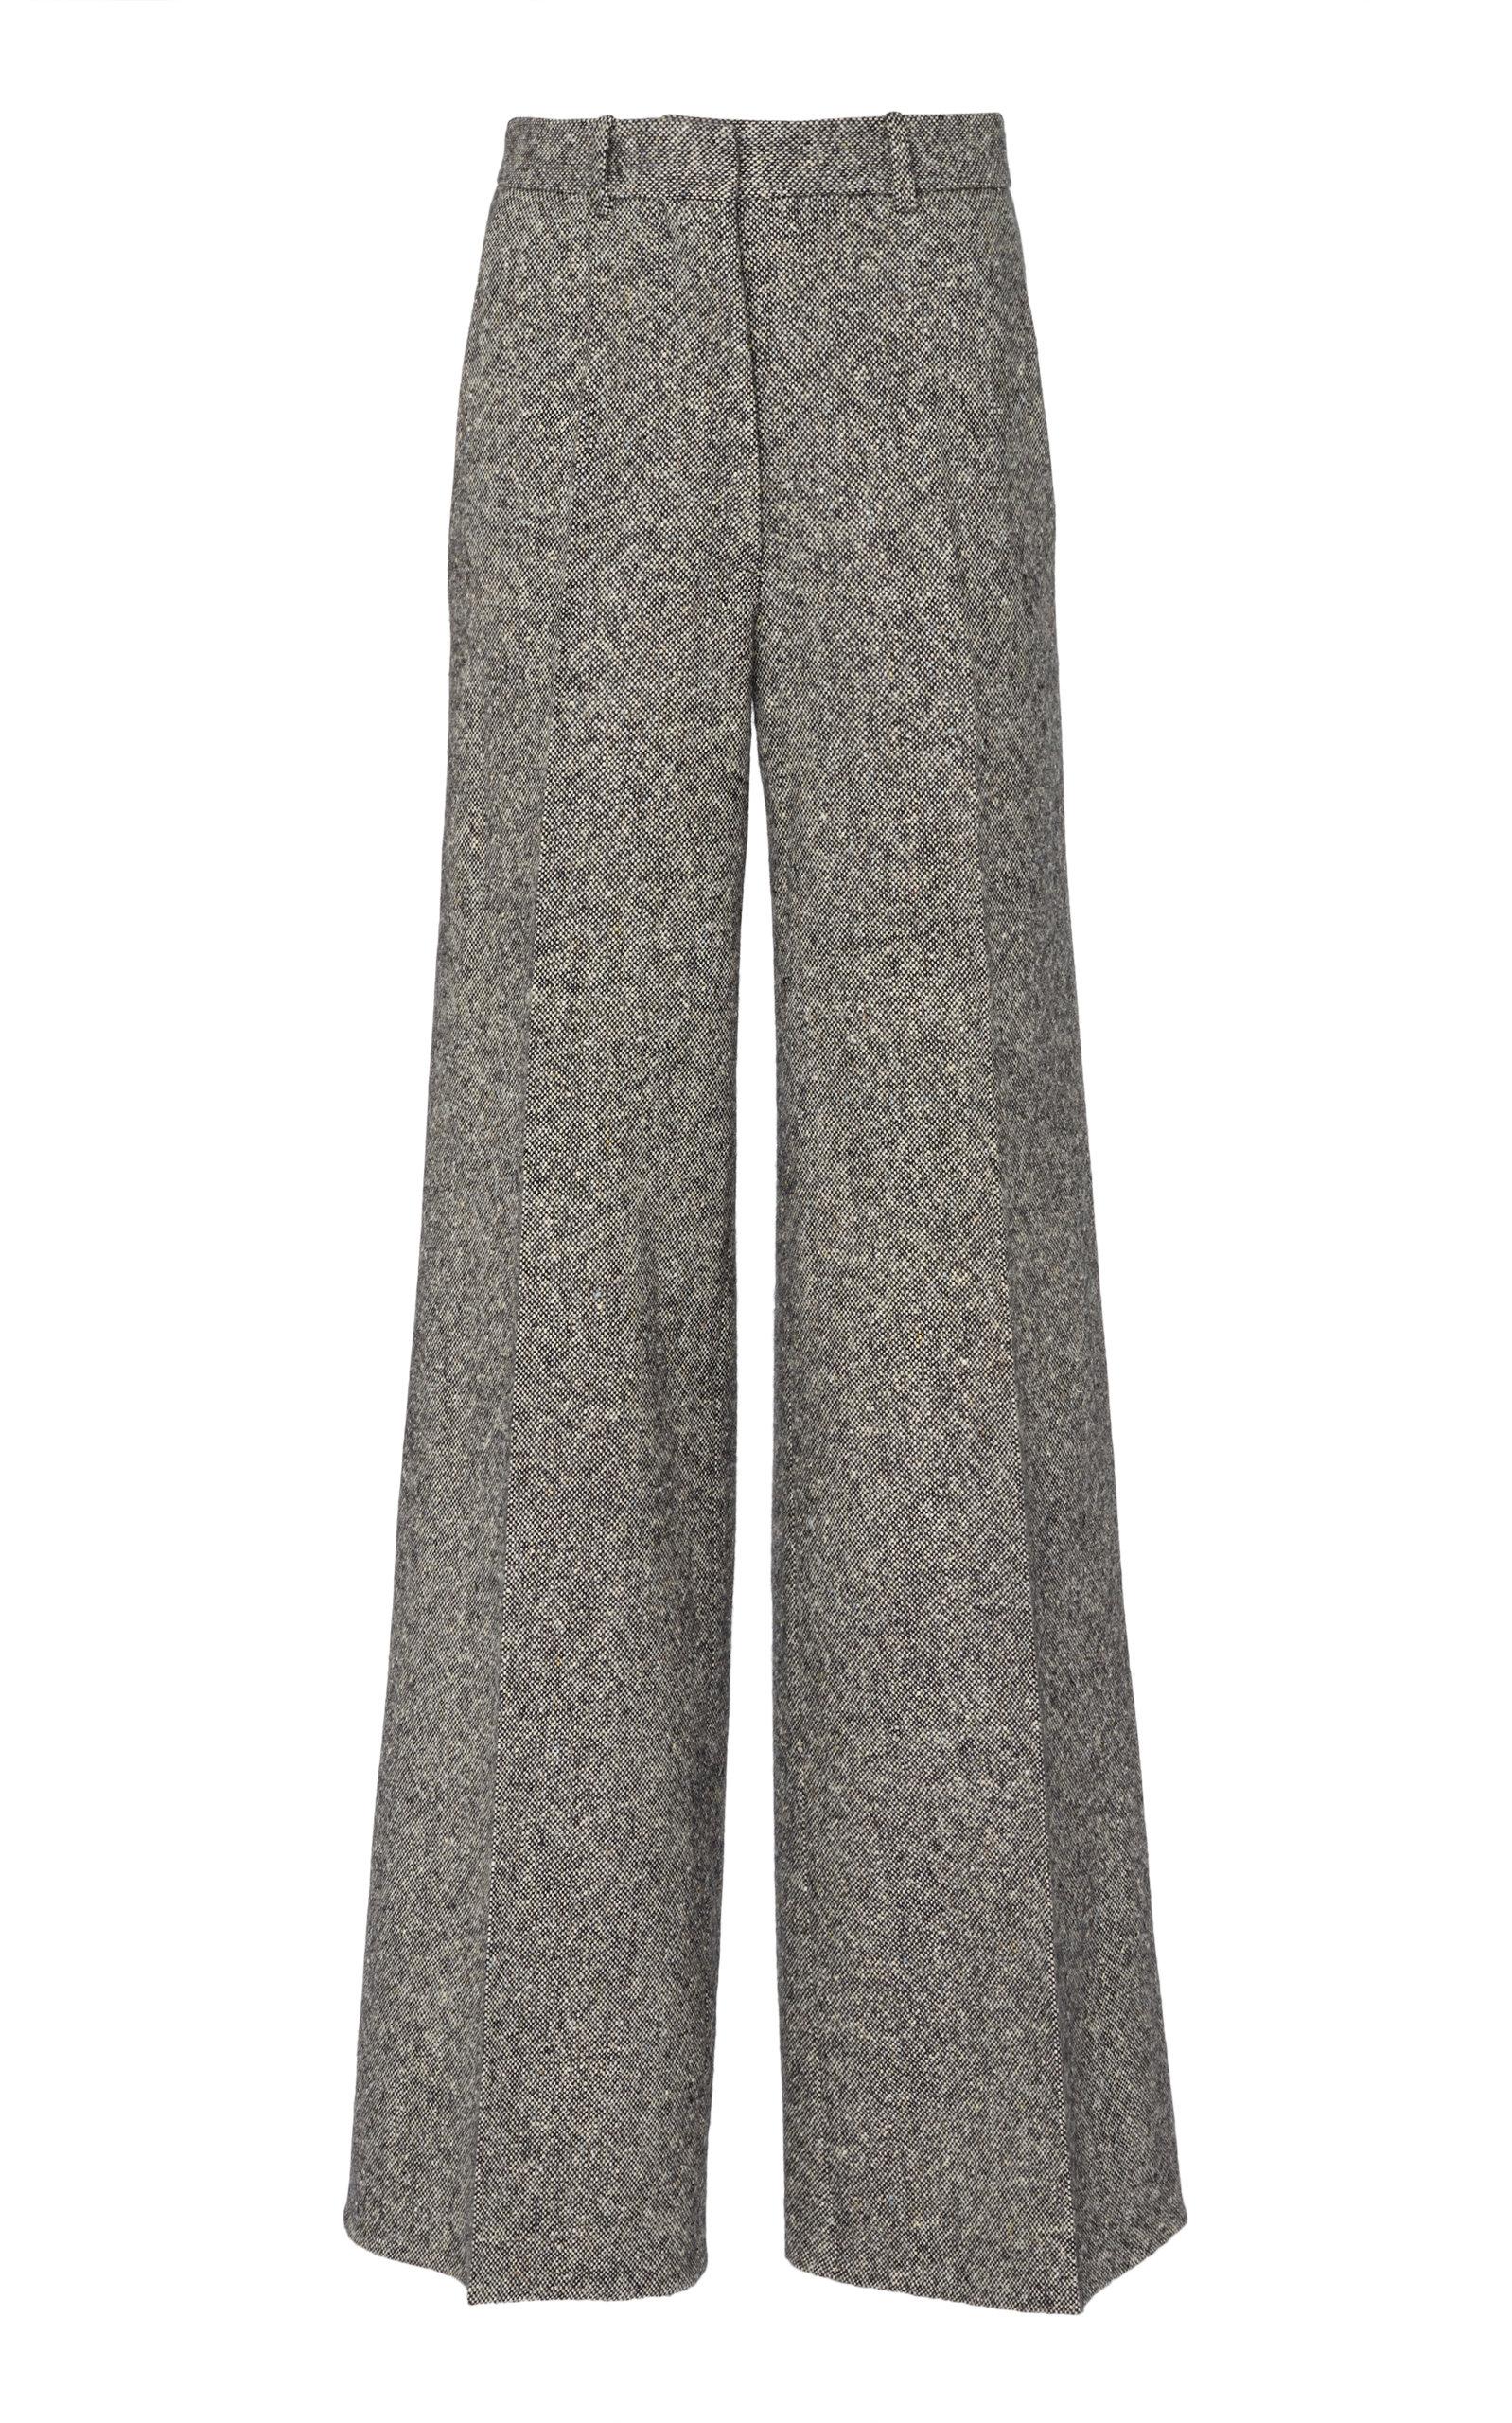 Victoria Beckham Tweed Wool Wide-leg Pants in Grey (Gray) - Lyst